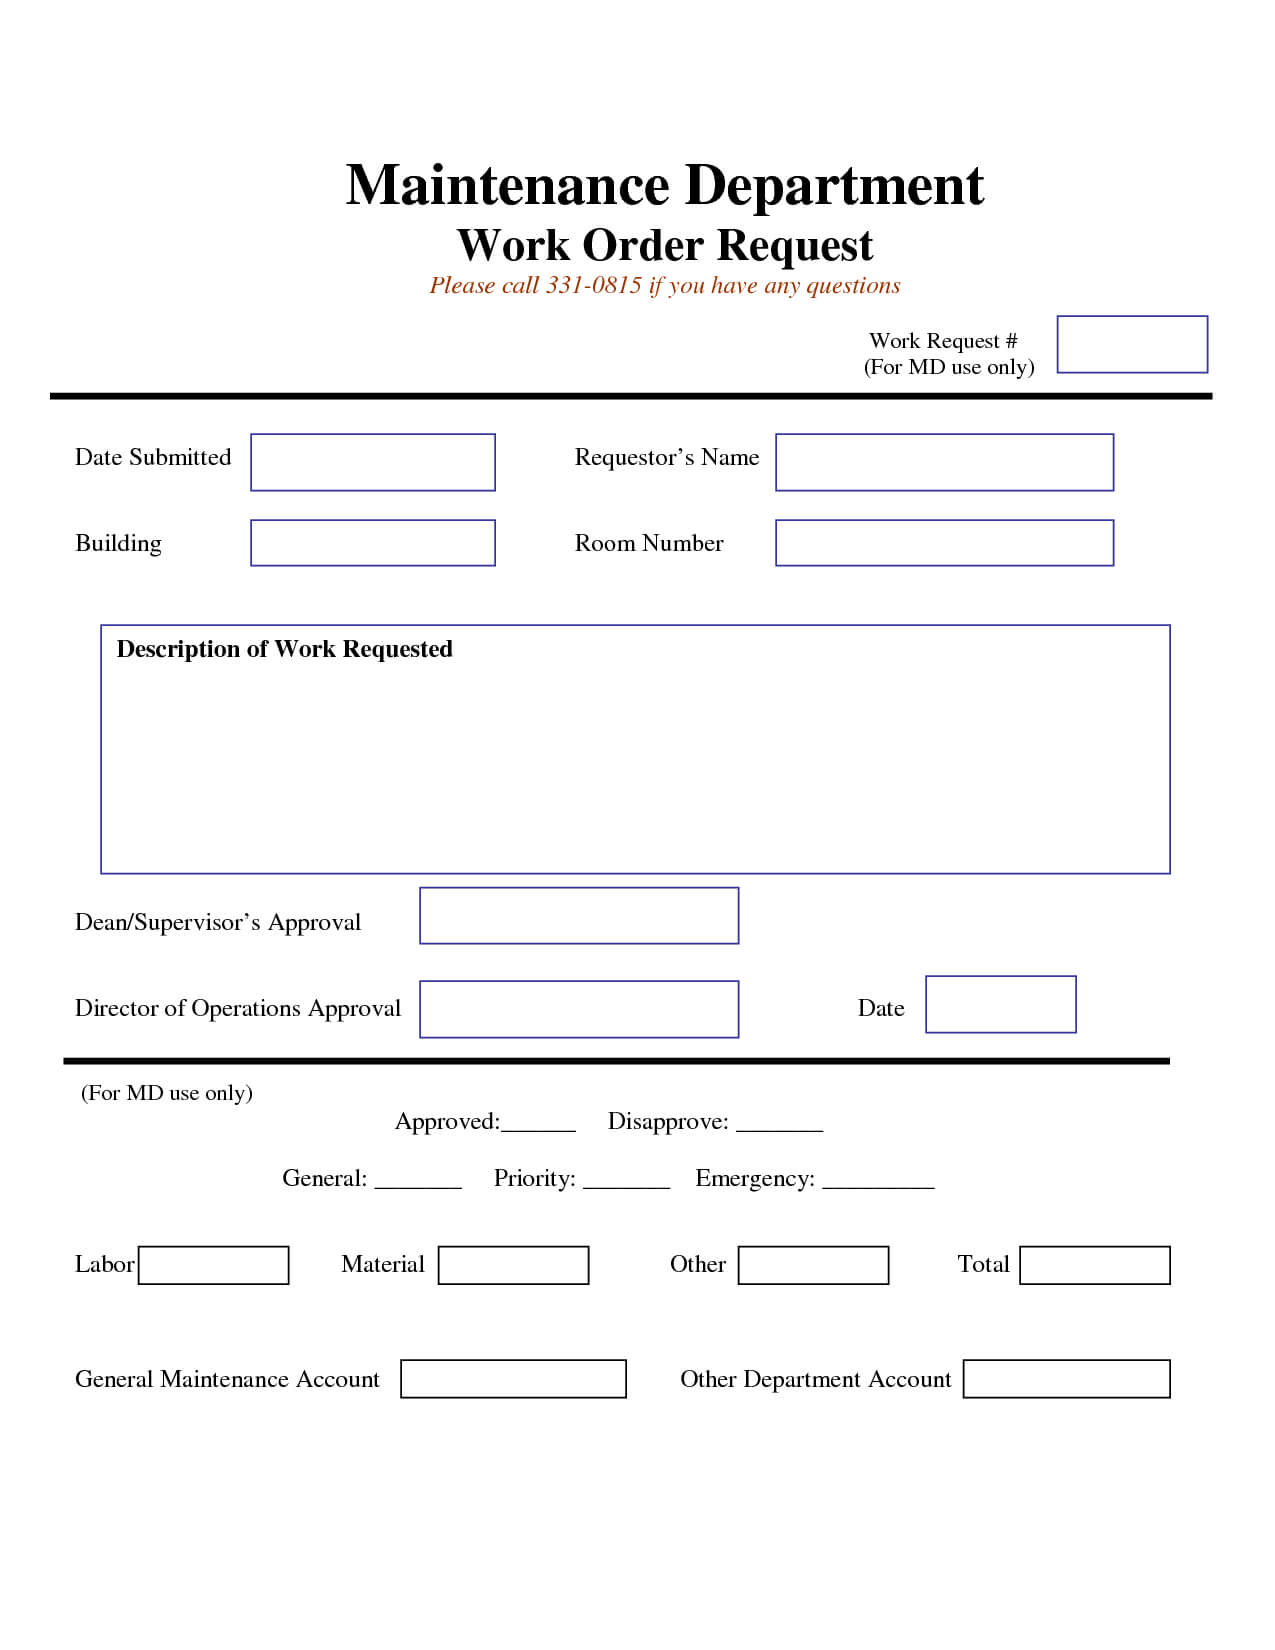 Work Request Form | Maintenance Work Order Request Form Inside Maintenance Job Card Template